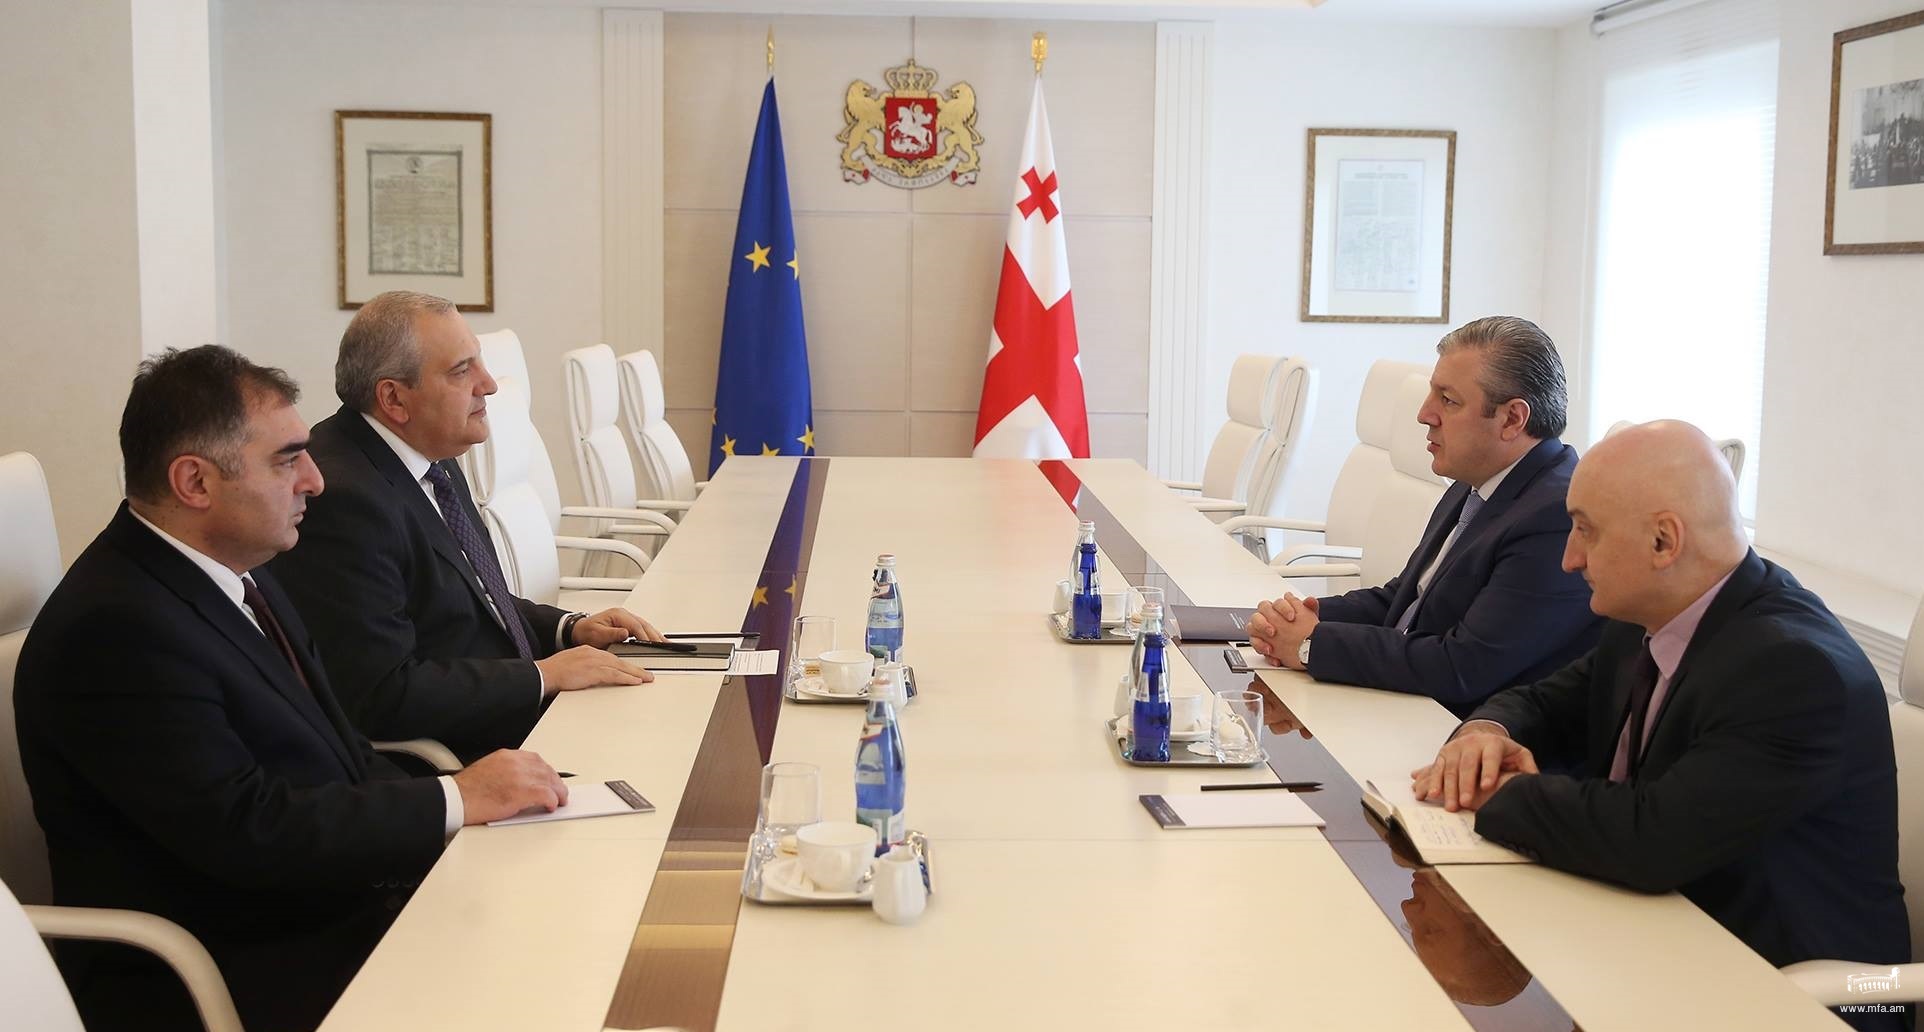 Meeting of Ambassador Sadoyan with Prime Minister of Georgia Giorgi Kvirikashvili